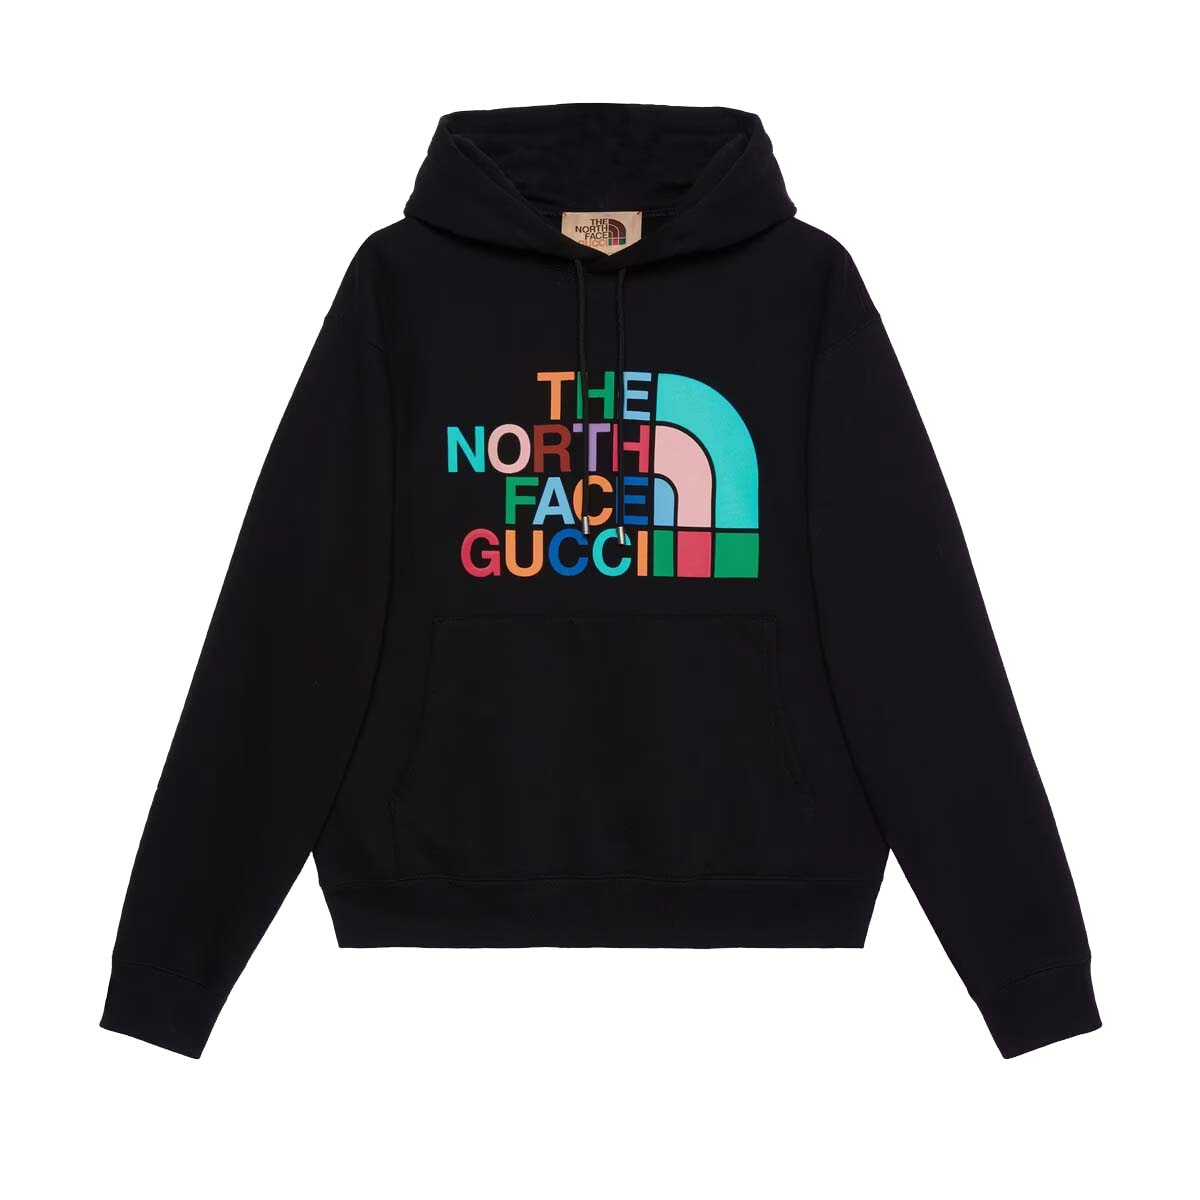 Gucci x The North Face Sweatshirt Black/Multicolor